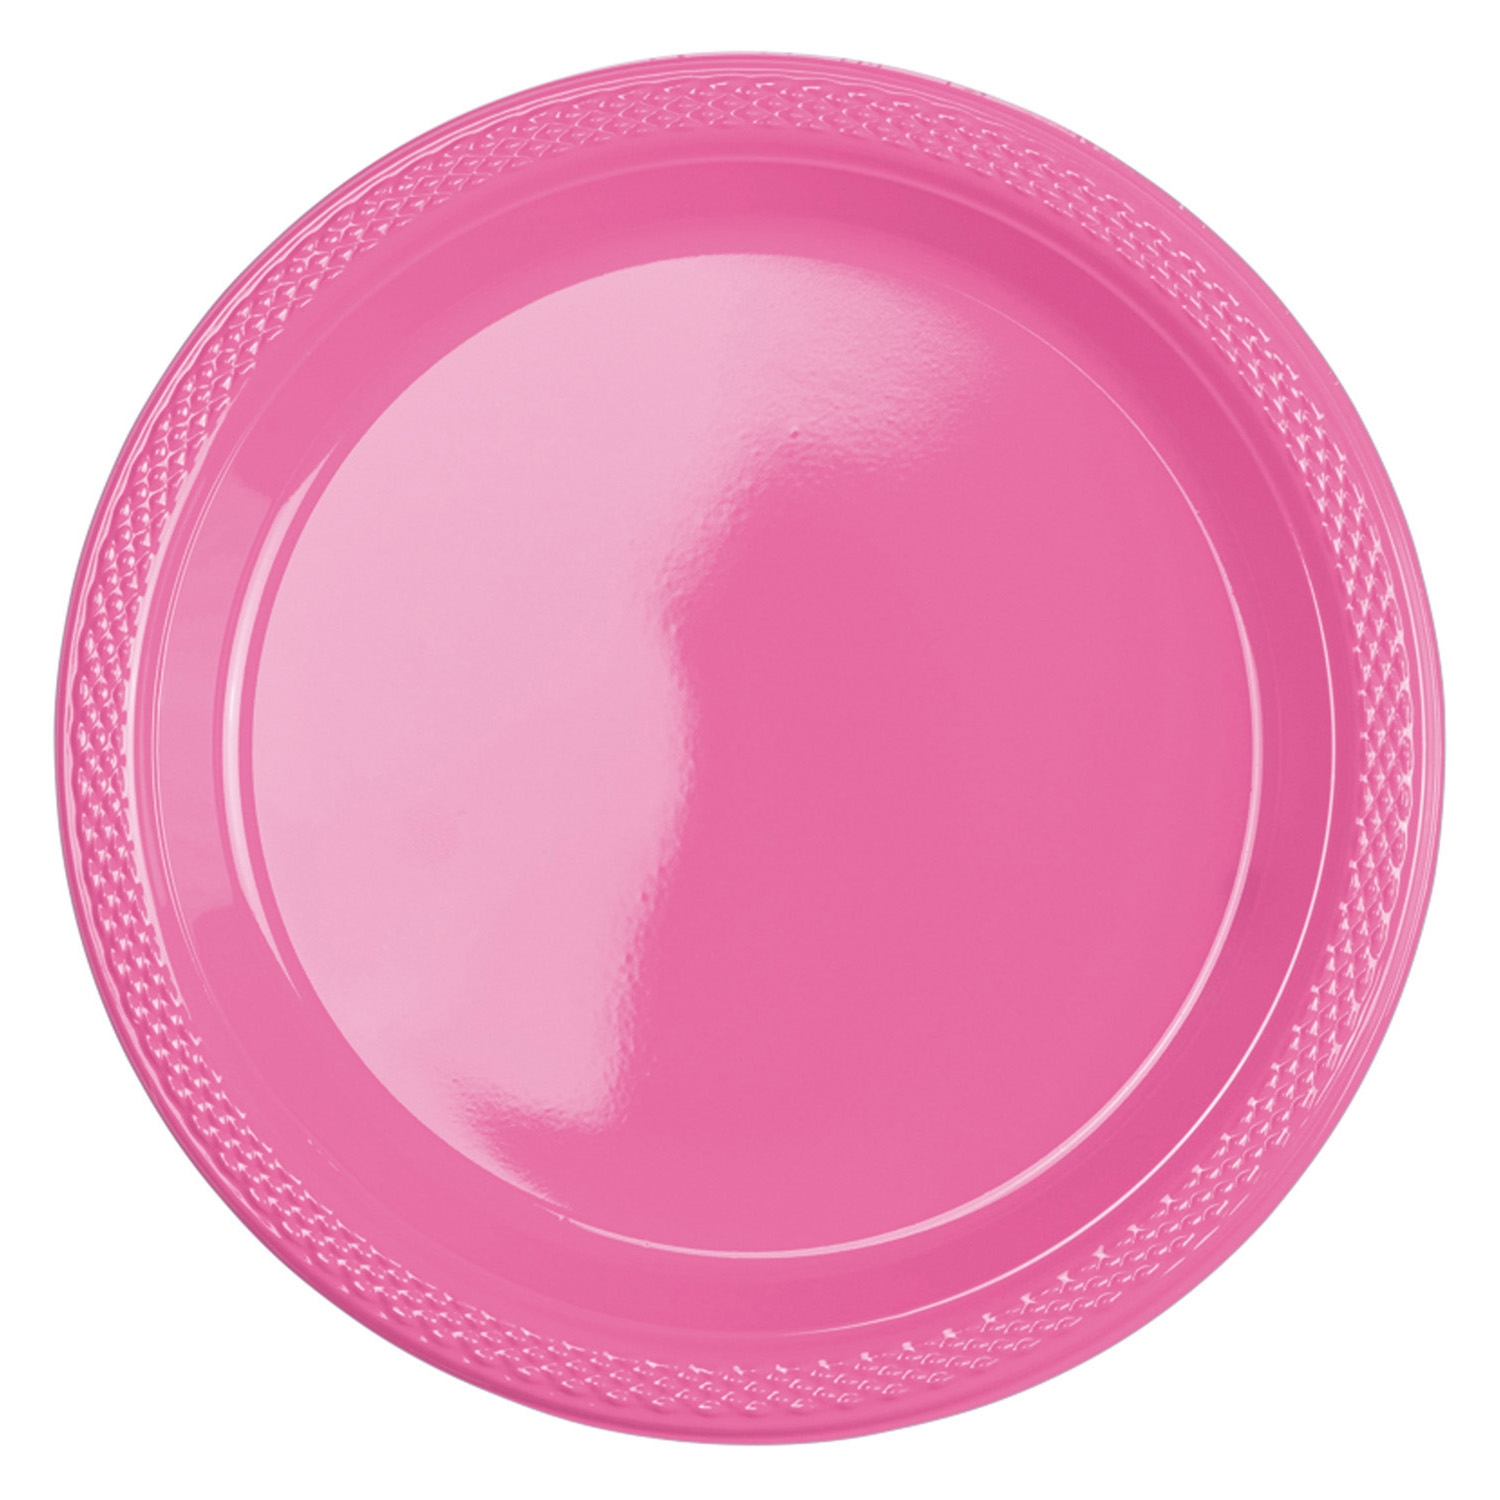 10 Plates Plastic Bright Pink 17.7cm Amscan Europe